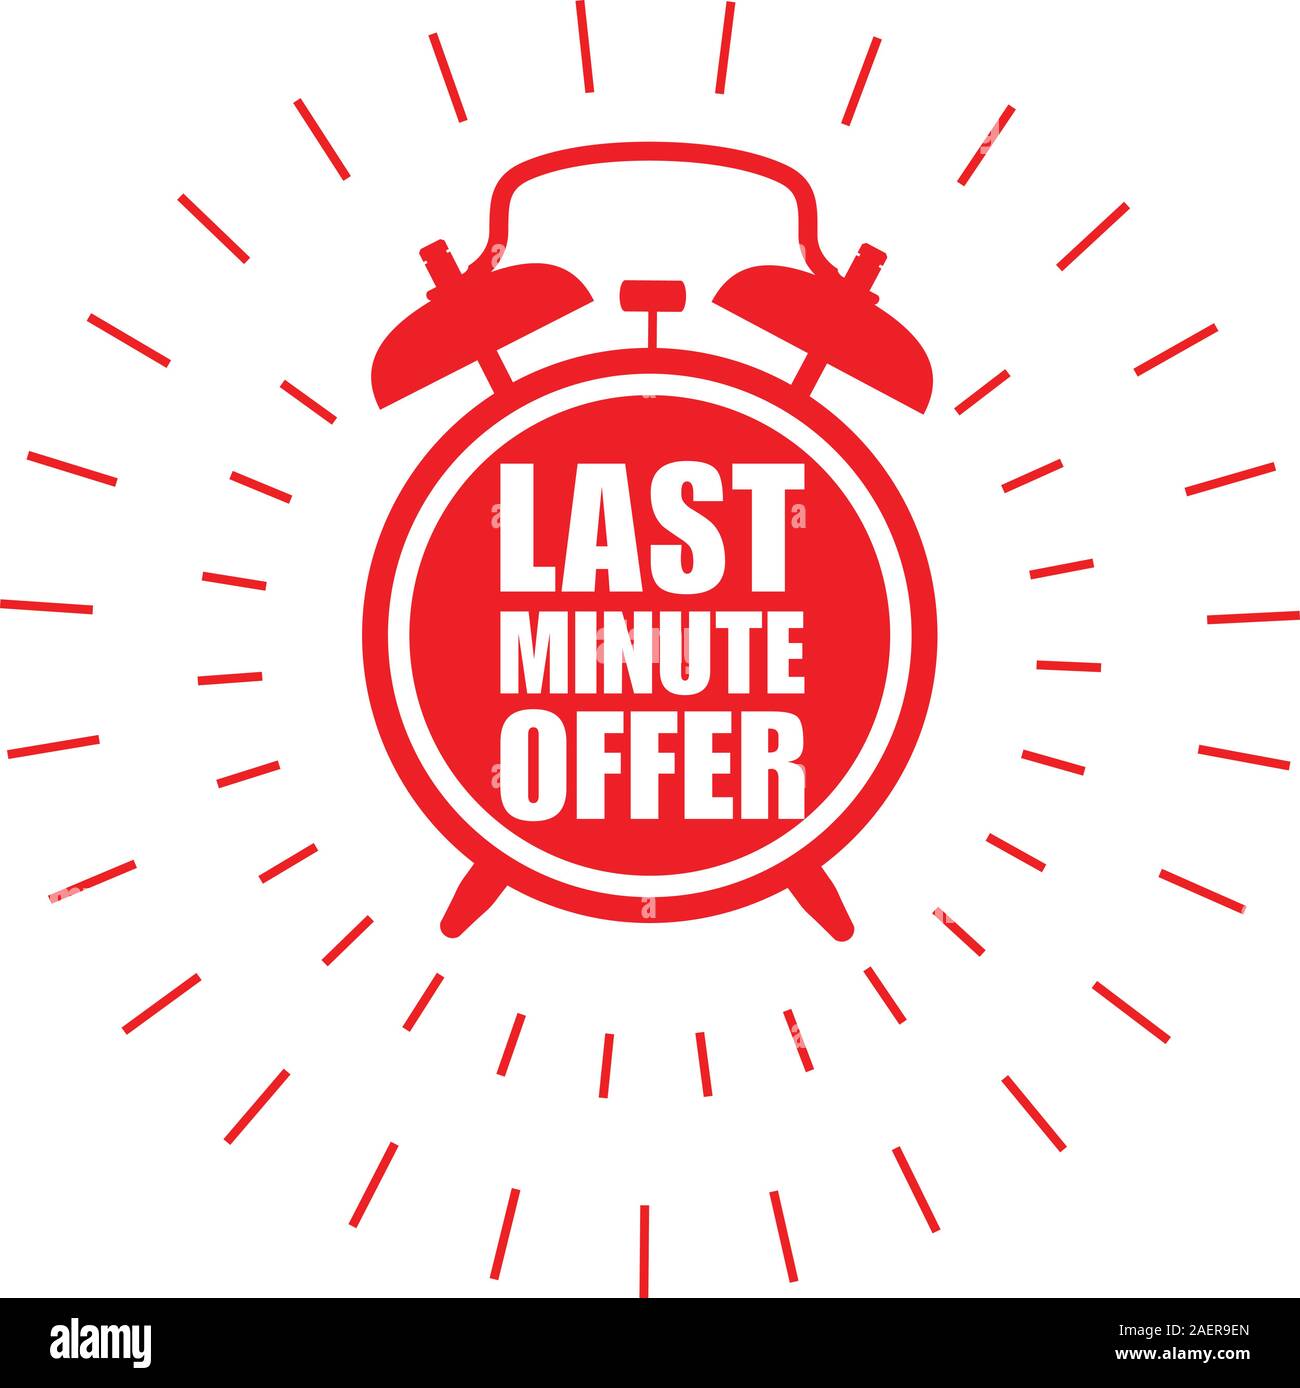 https://c8.alamy.com/comp/2AER9EN/last-minute-offer-sticker-sale-label-with-ringing-alarm-clock-and-haste-call-2AER9EN.jpg